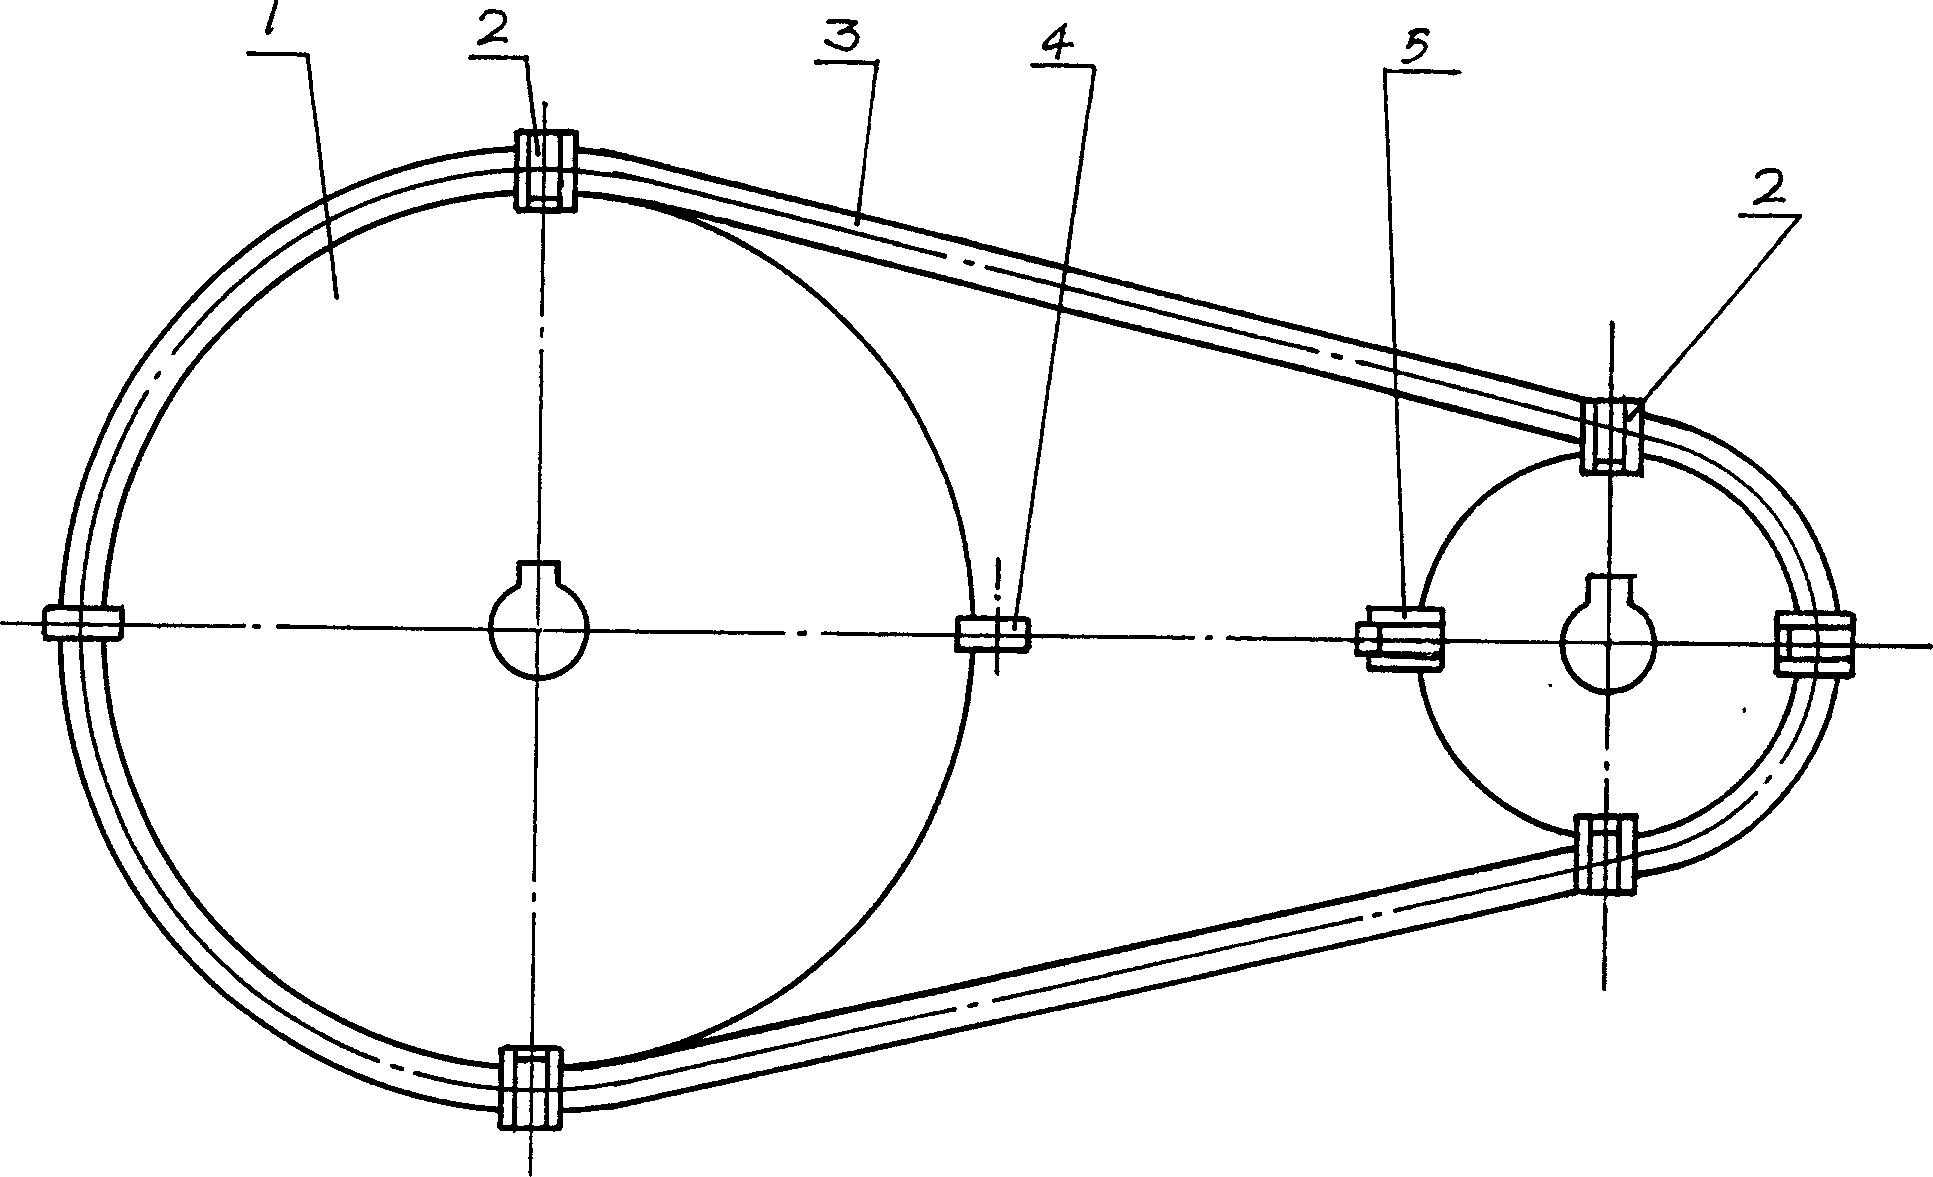 Rope transmission mechanism